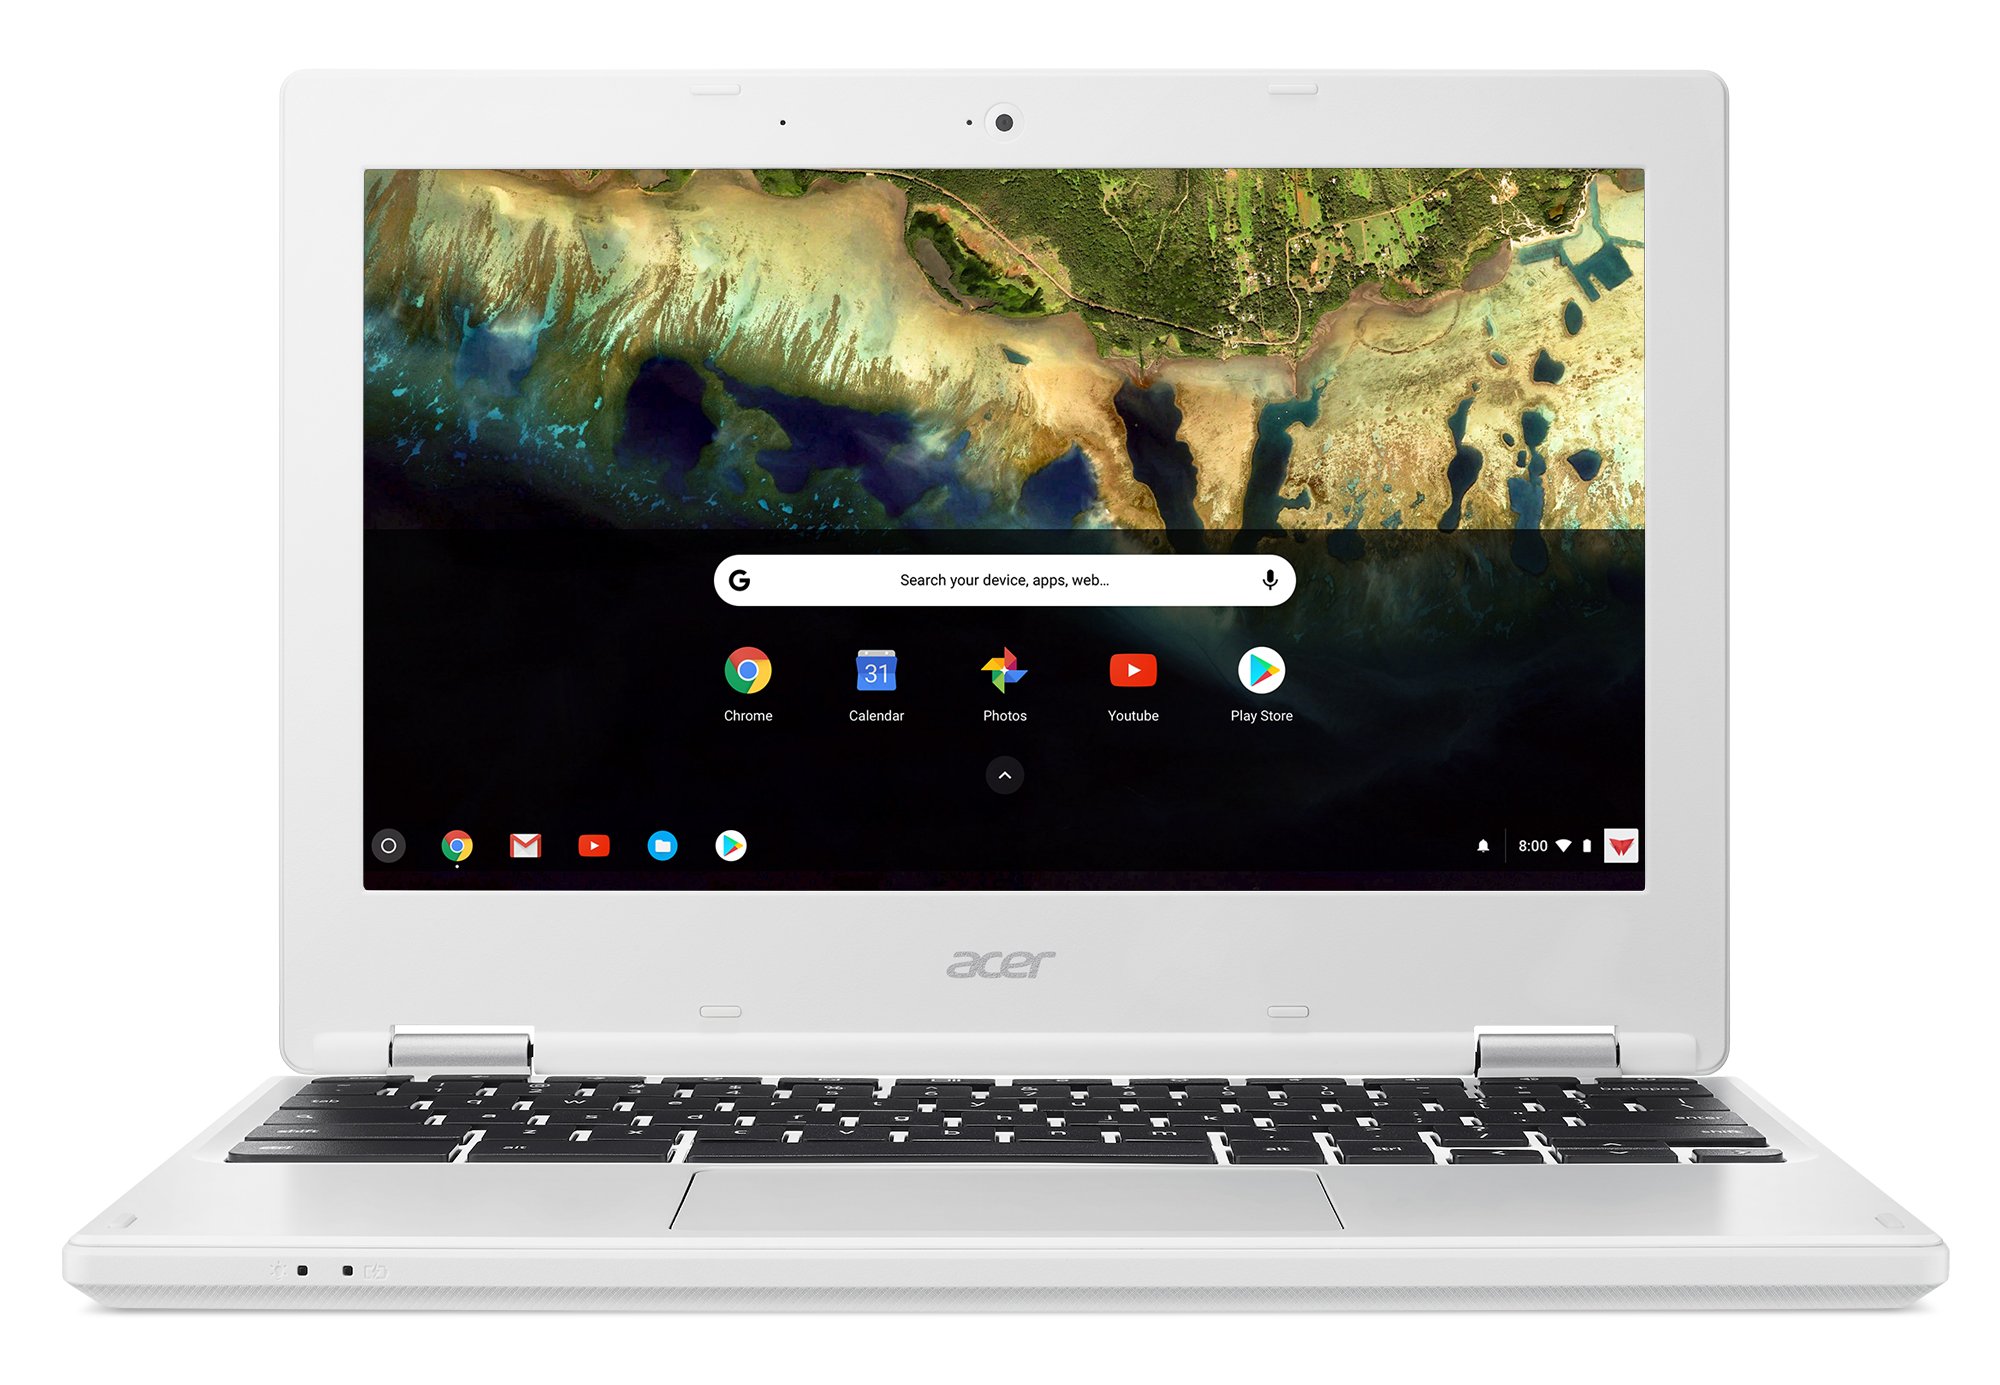 Acer Chromebook 11, Celeron N3060, 11.6